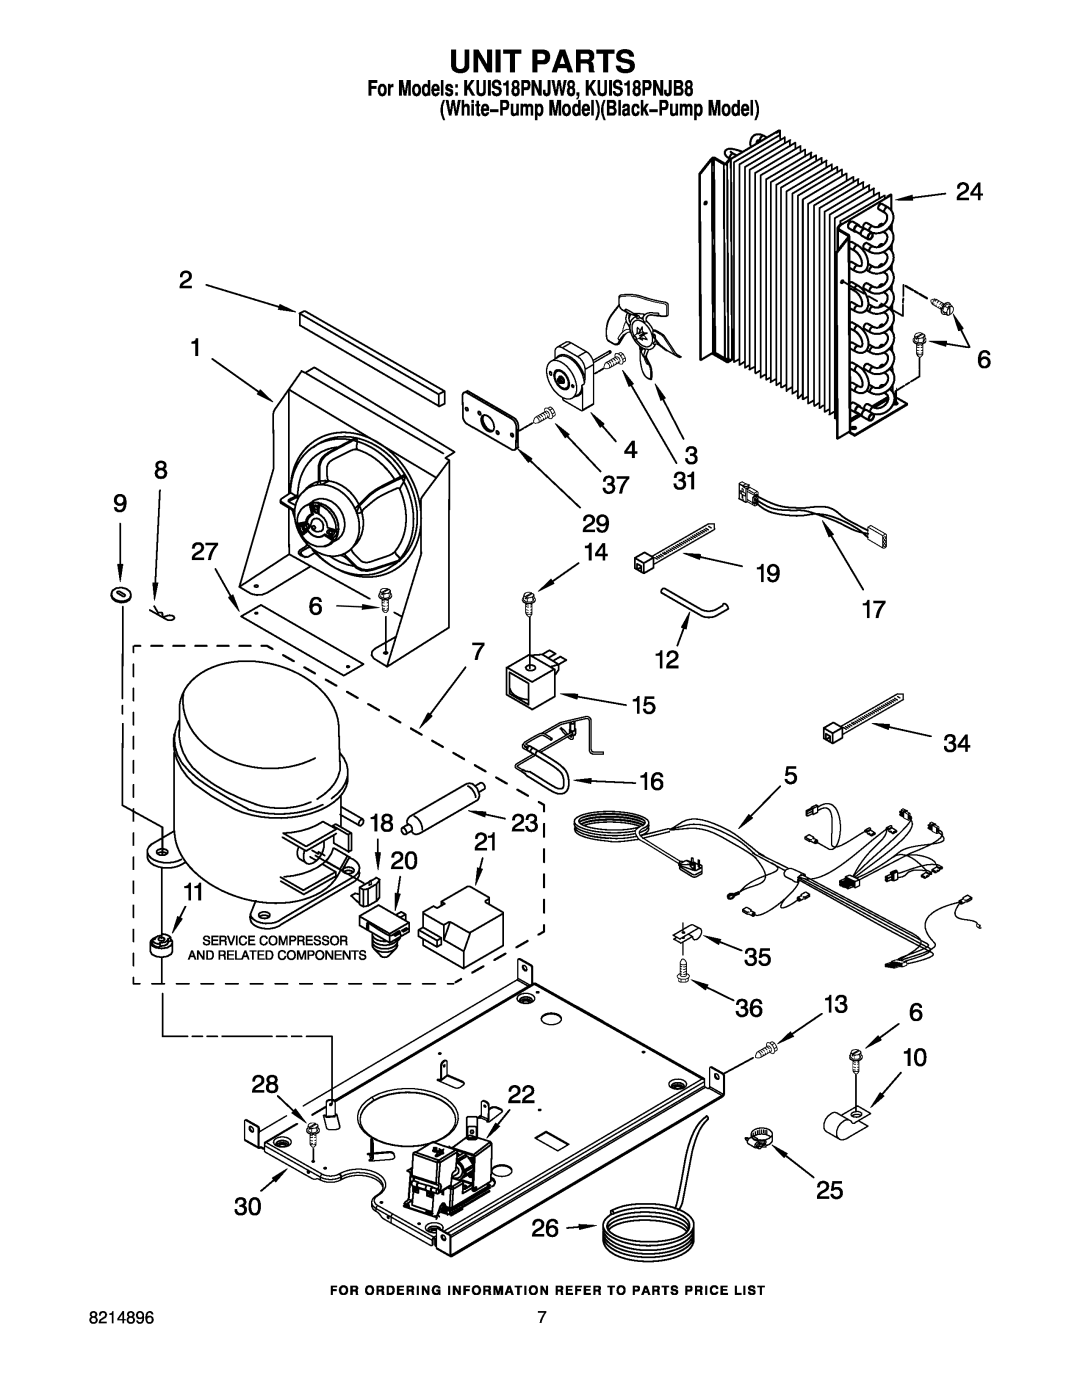 KitchenAid manual Unit Parts, For Models KUIS18PNJW8, KUIS18PNJB8 White−Pump ModelBlack−Pump Model 